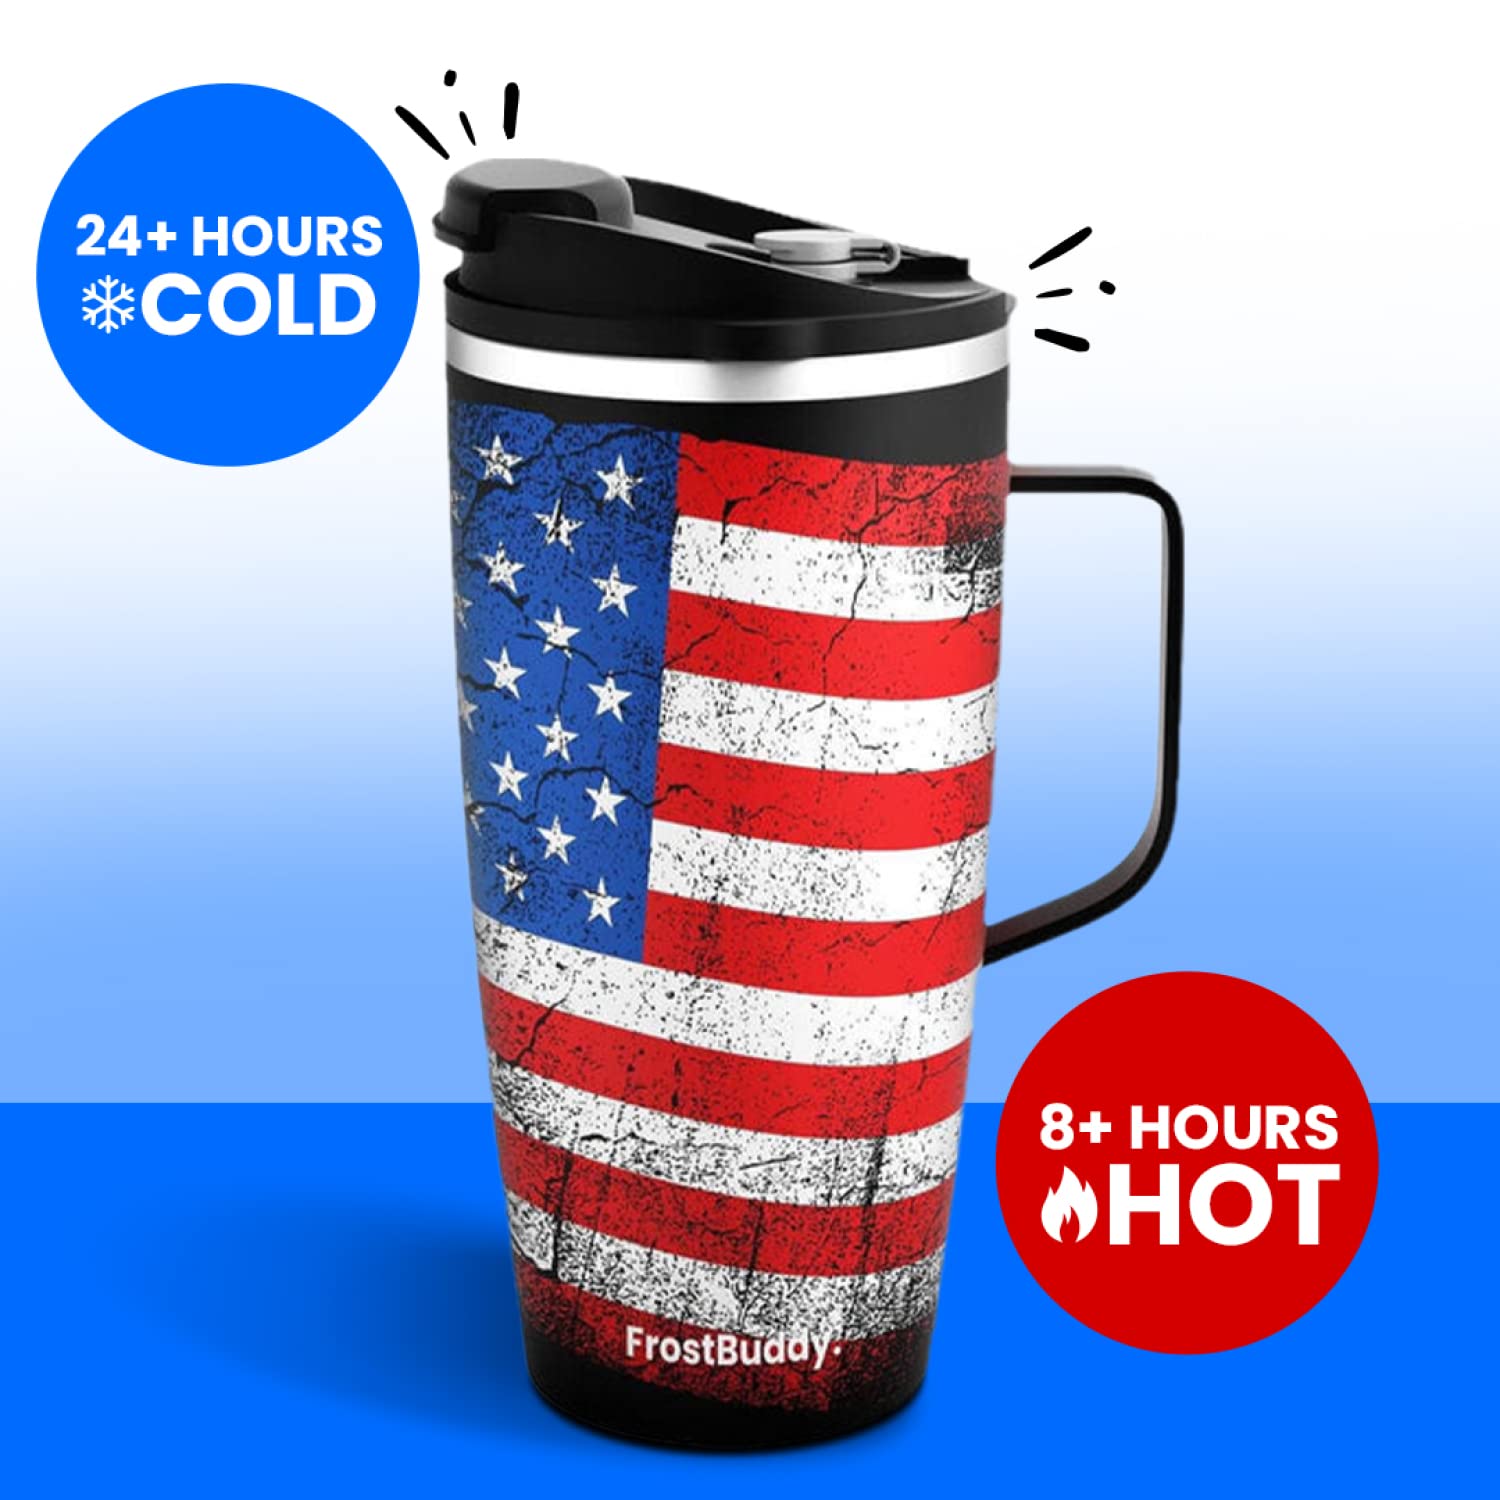 Frostbuddy | Joe Buddy Insulated Mug Travel Coffee Mug with Handle and Lid - Travel Coffee Cup - Coffee Mugs - Insulated Cups for Hot Water, Tea, Coffee - Joe Buddy 20oz (Lights)